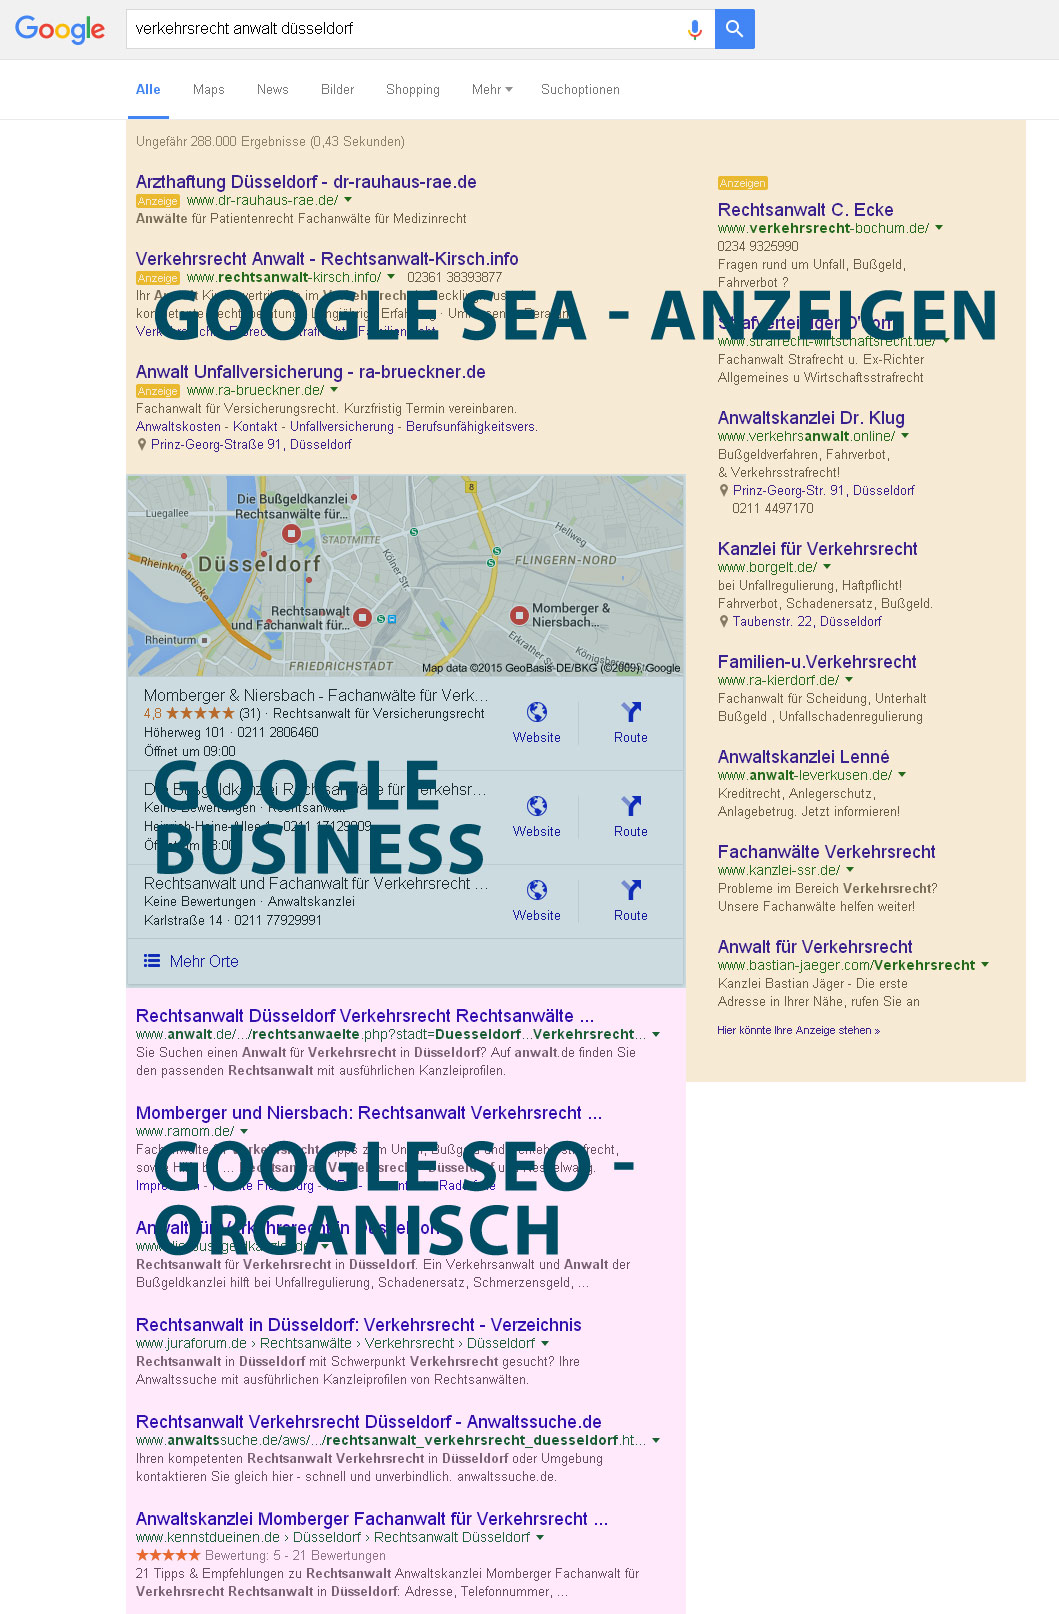 Google SEO SEA Bochum